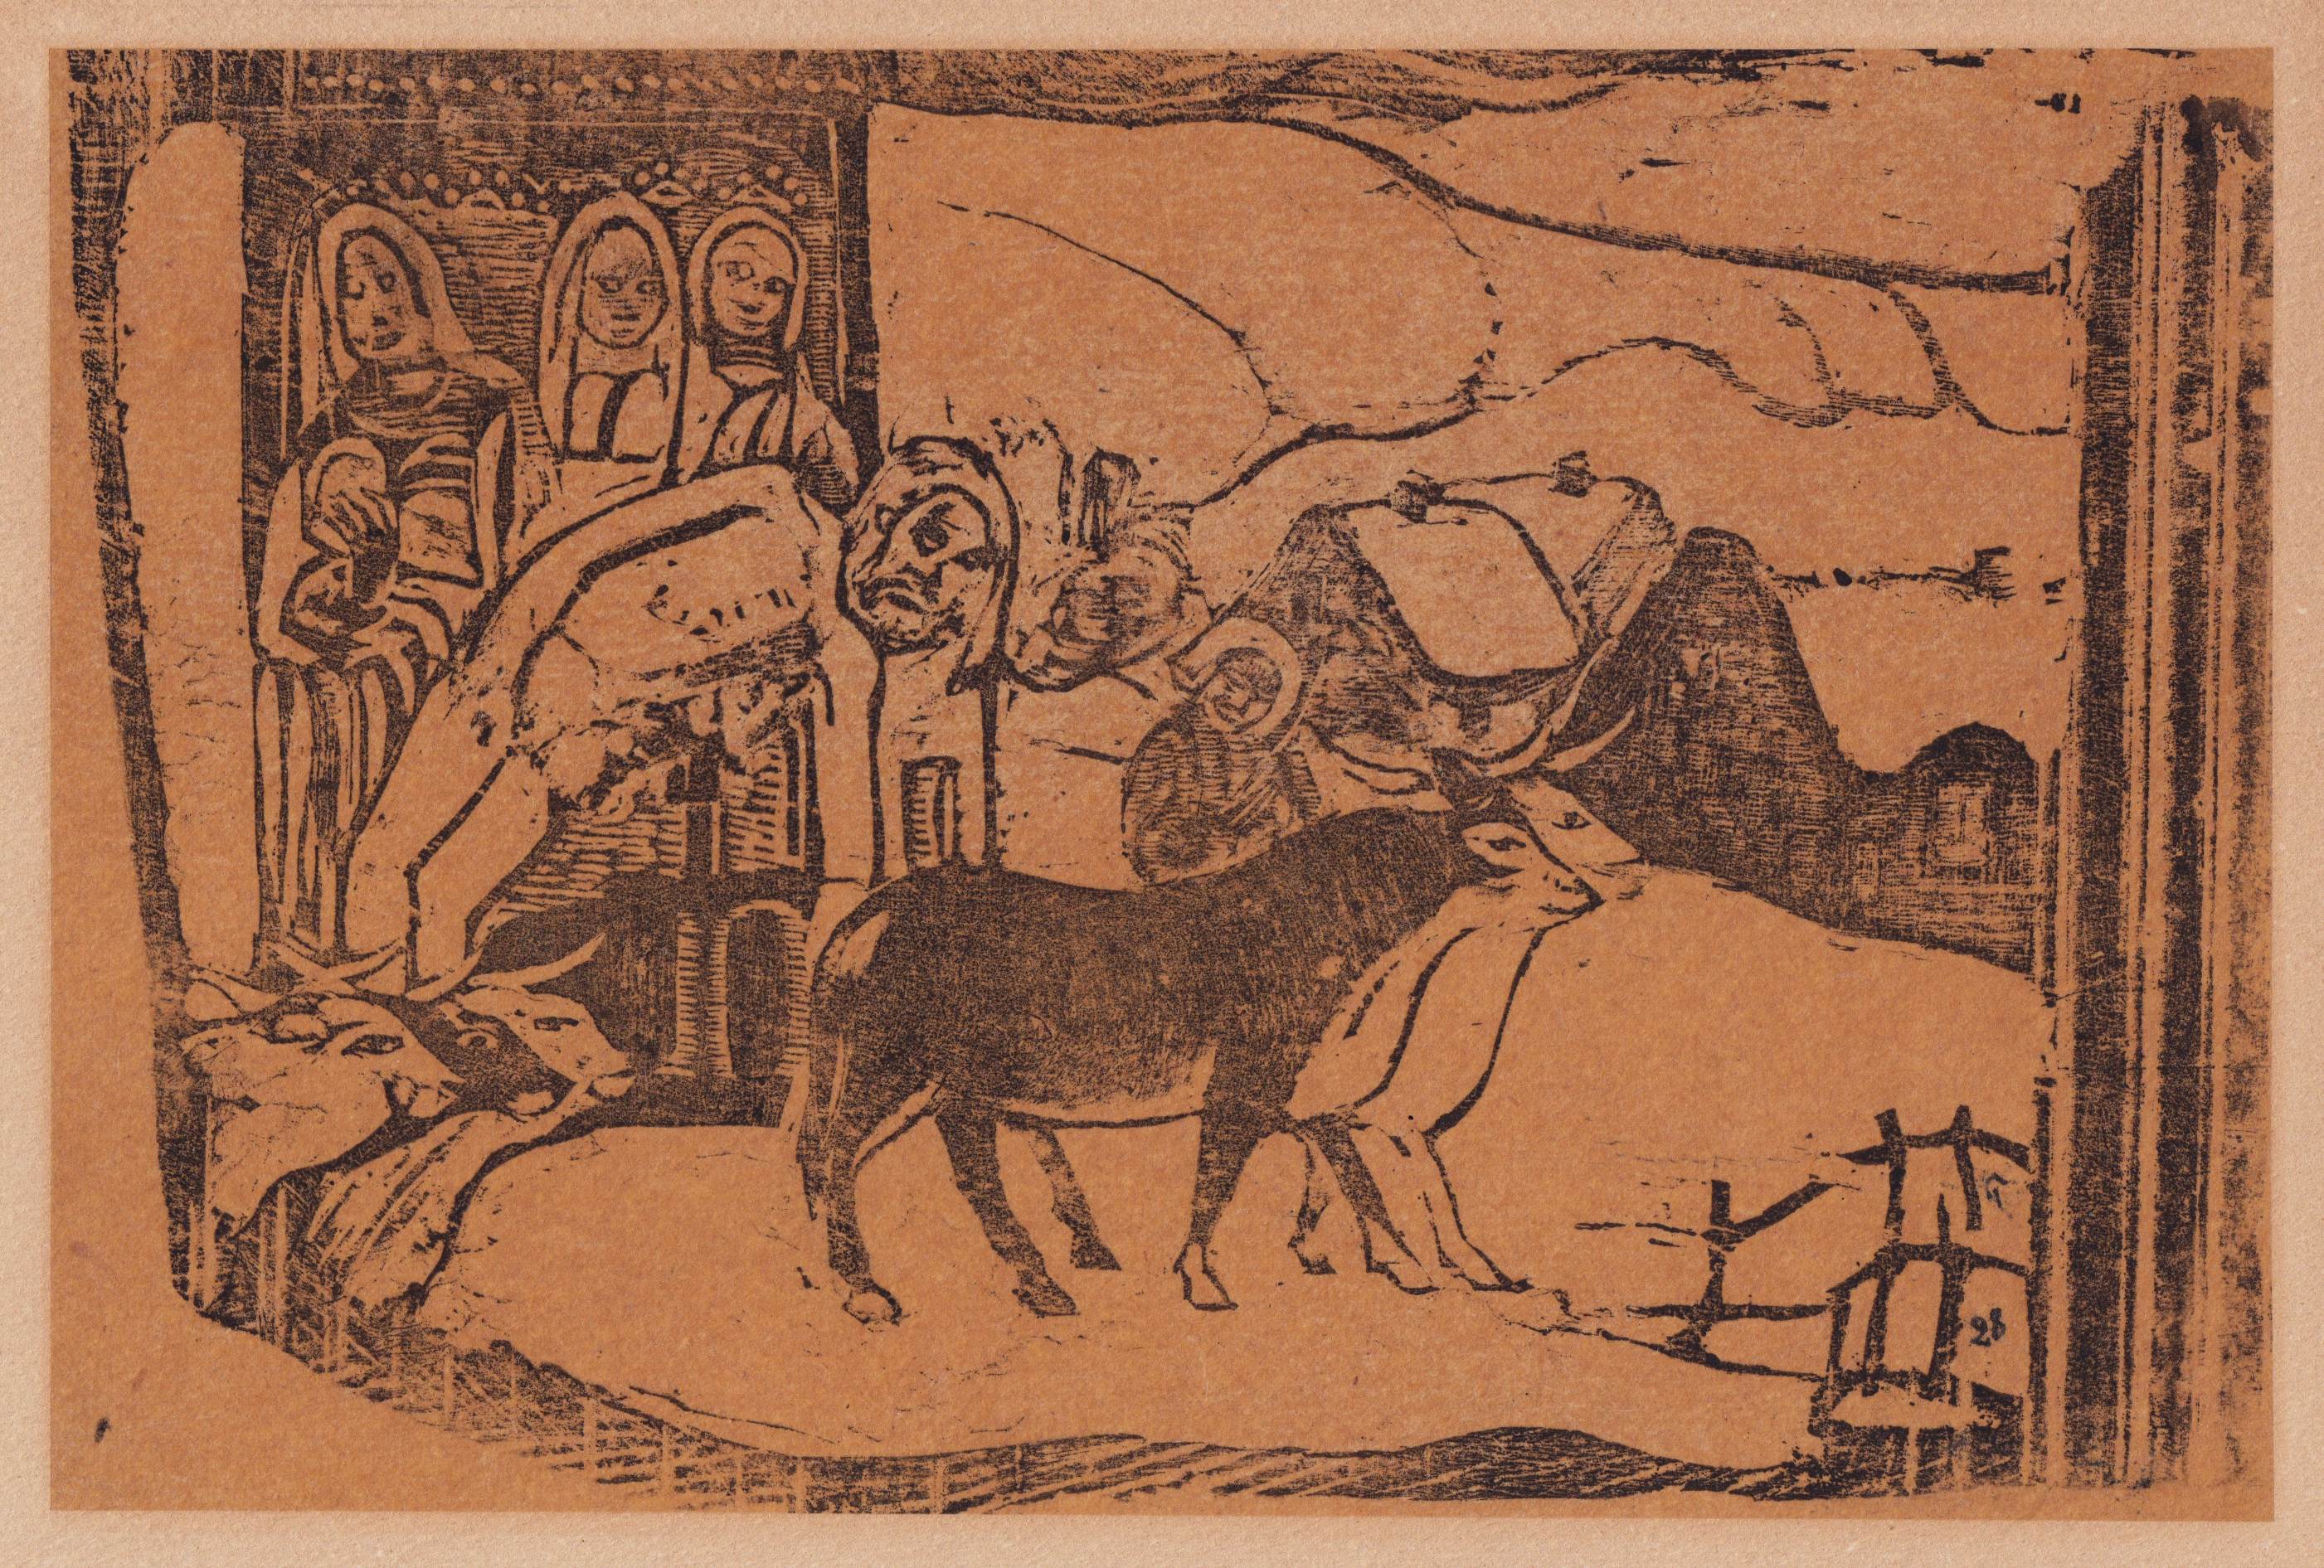 Paul Gauguin, Le Calvaire Breton, 1898-99, woodcut